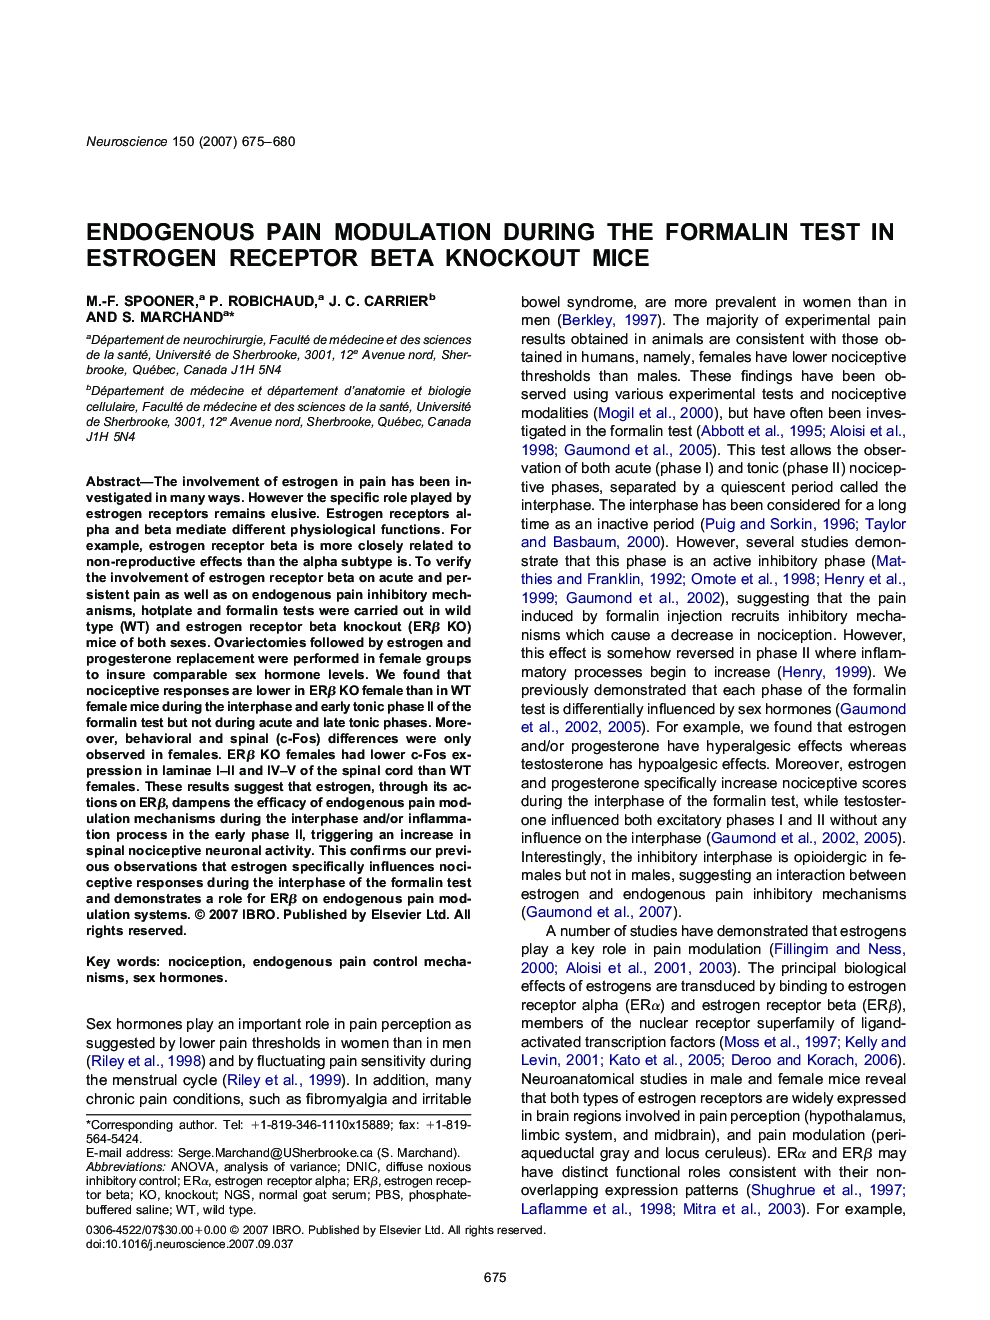 Endogenous pain modulation during the formalin test in estrogen receptor beta knockout mice